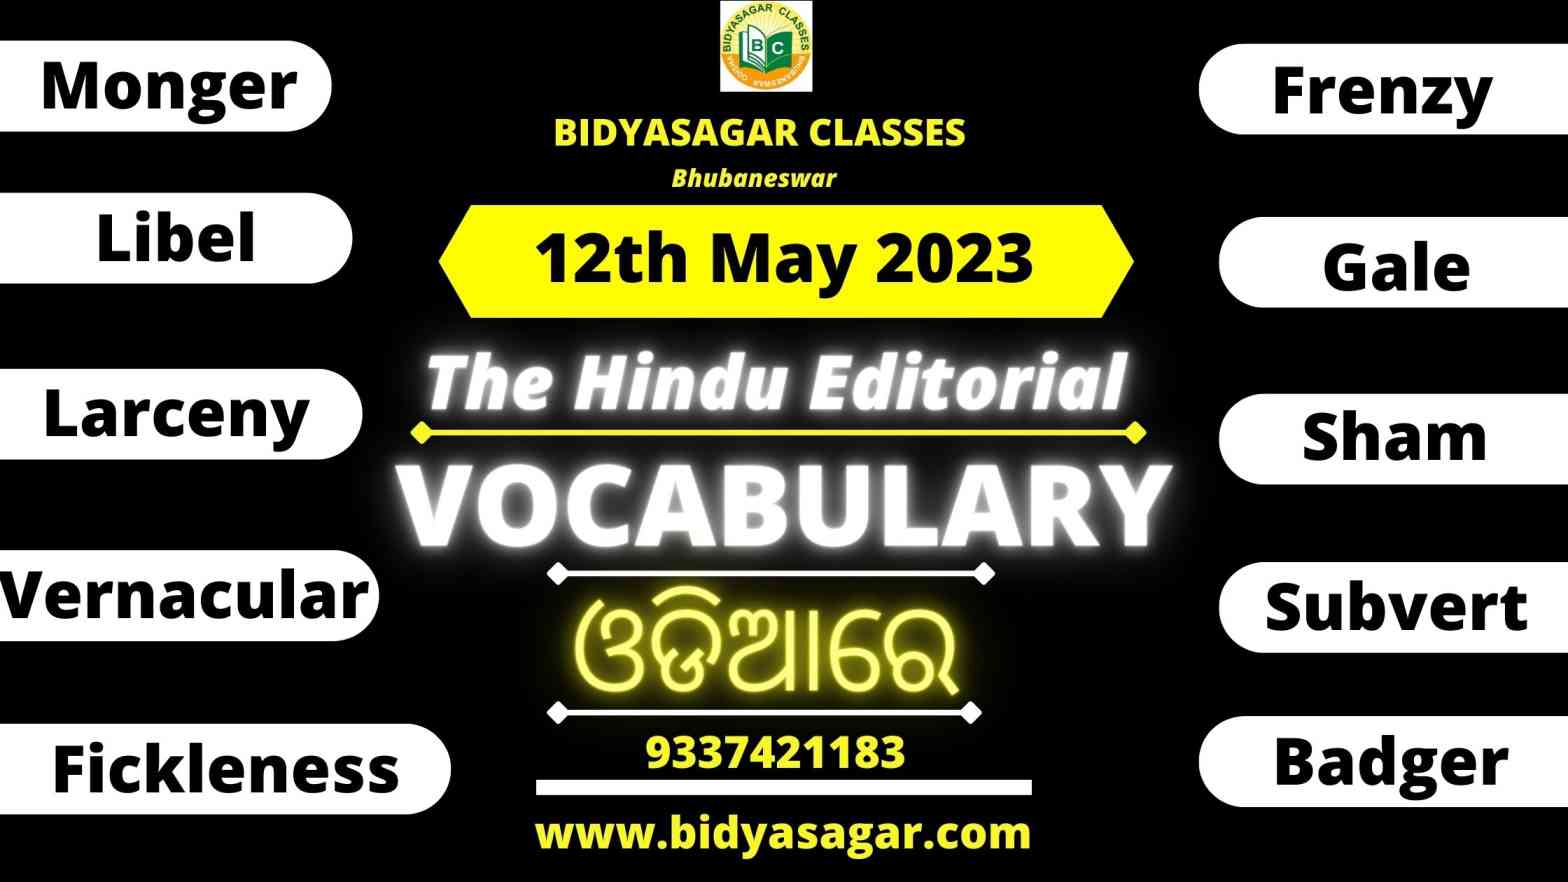 The Hindu Editorial Vocabulary of 12th May 2023